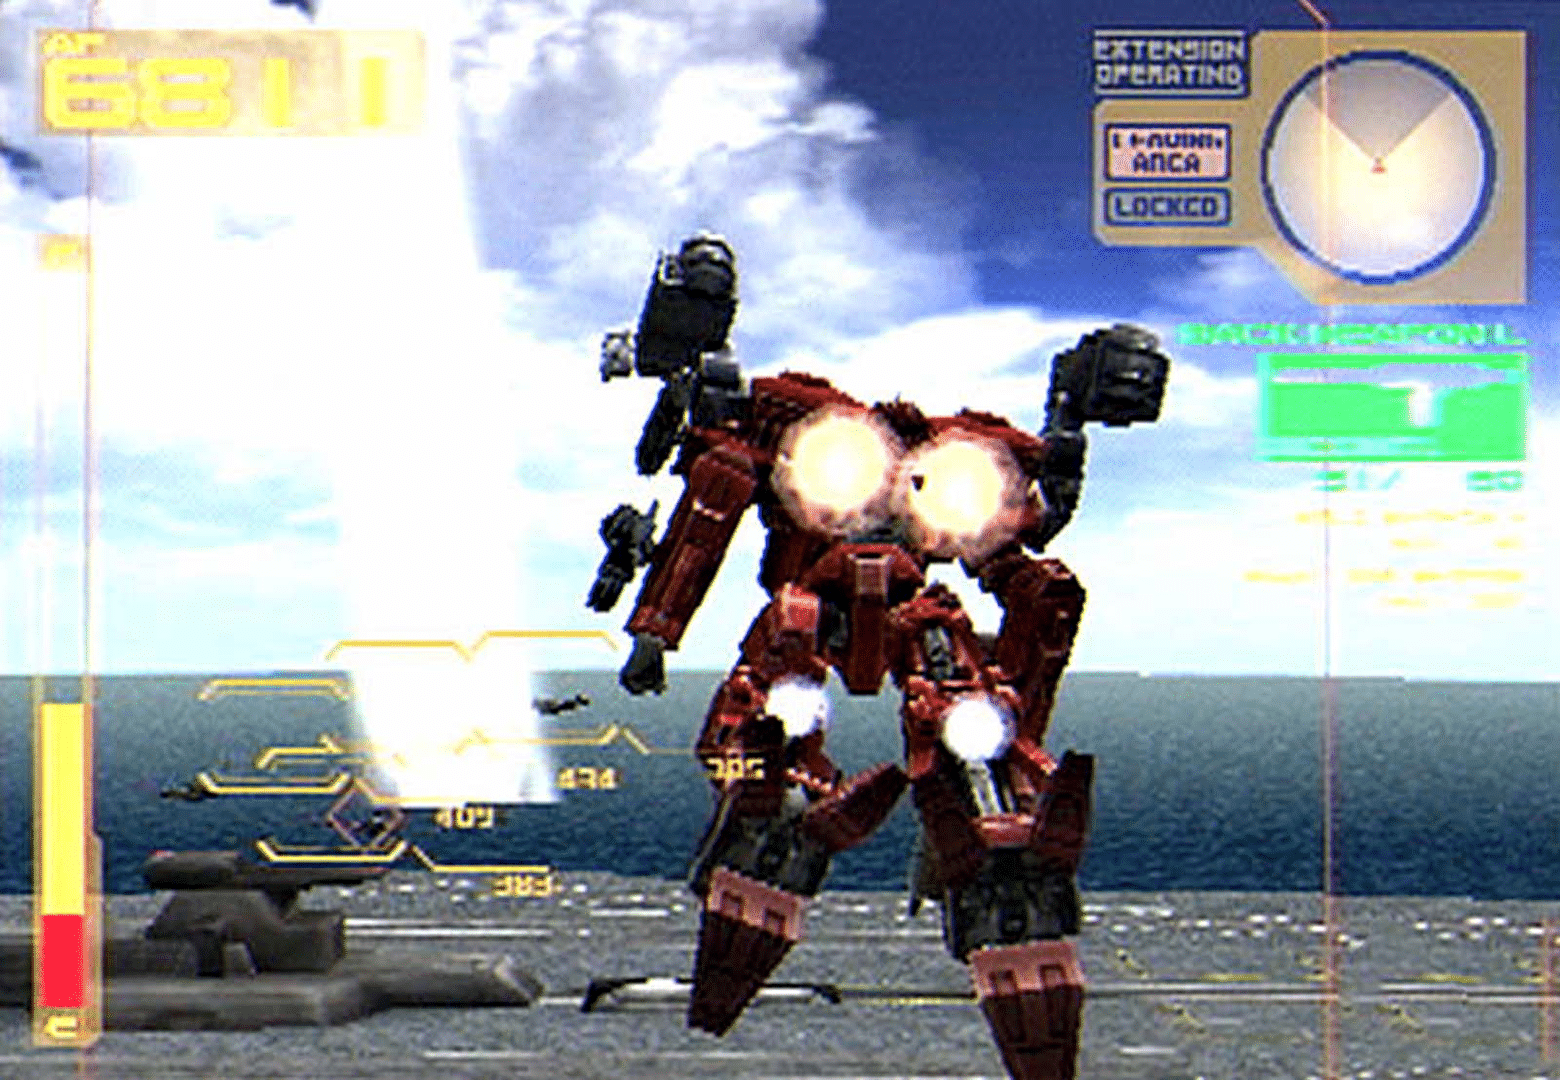 Armored Core 2 (2000)